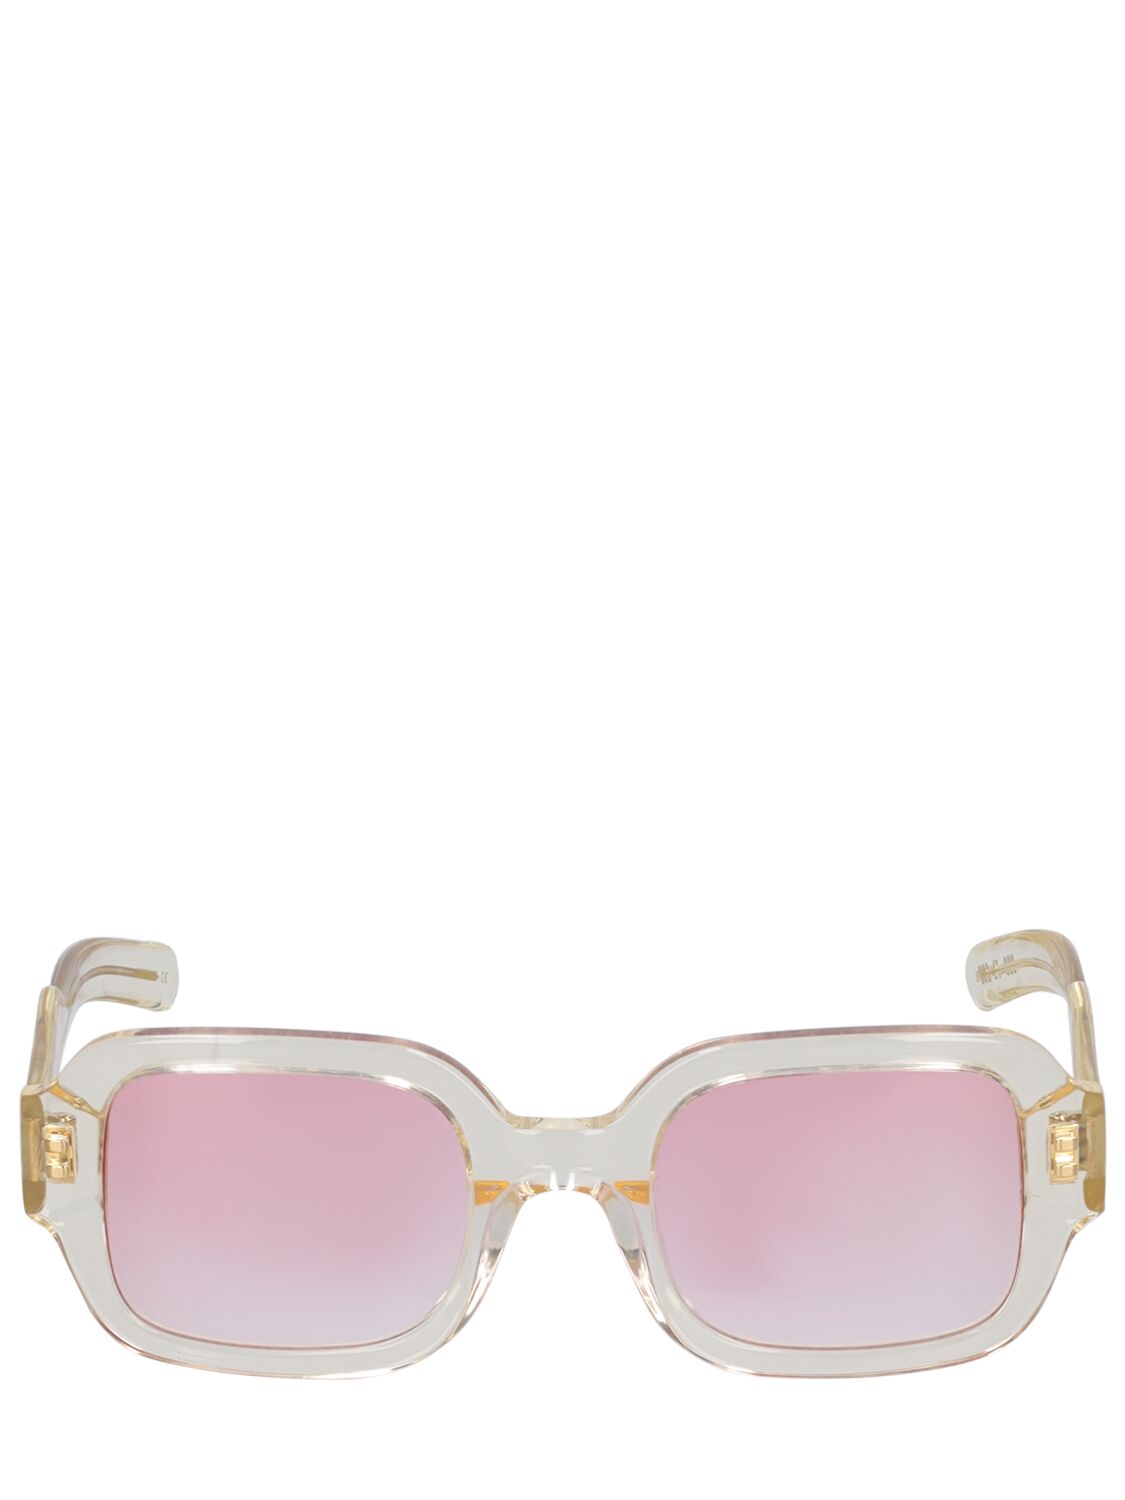 Flatlist Eyewear Tishkoff Sunglasses In Pink